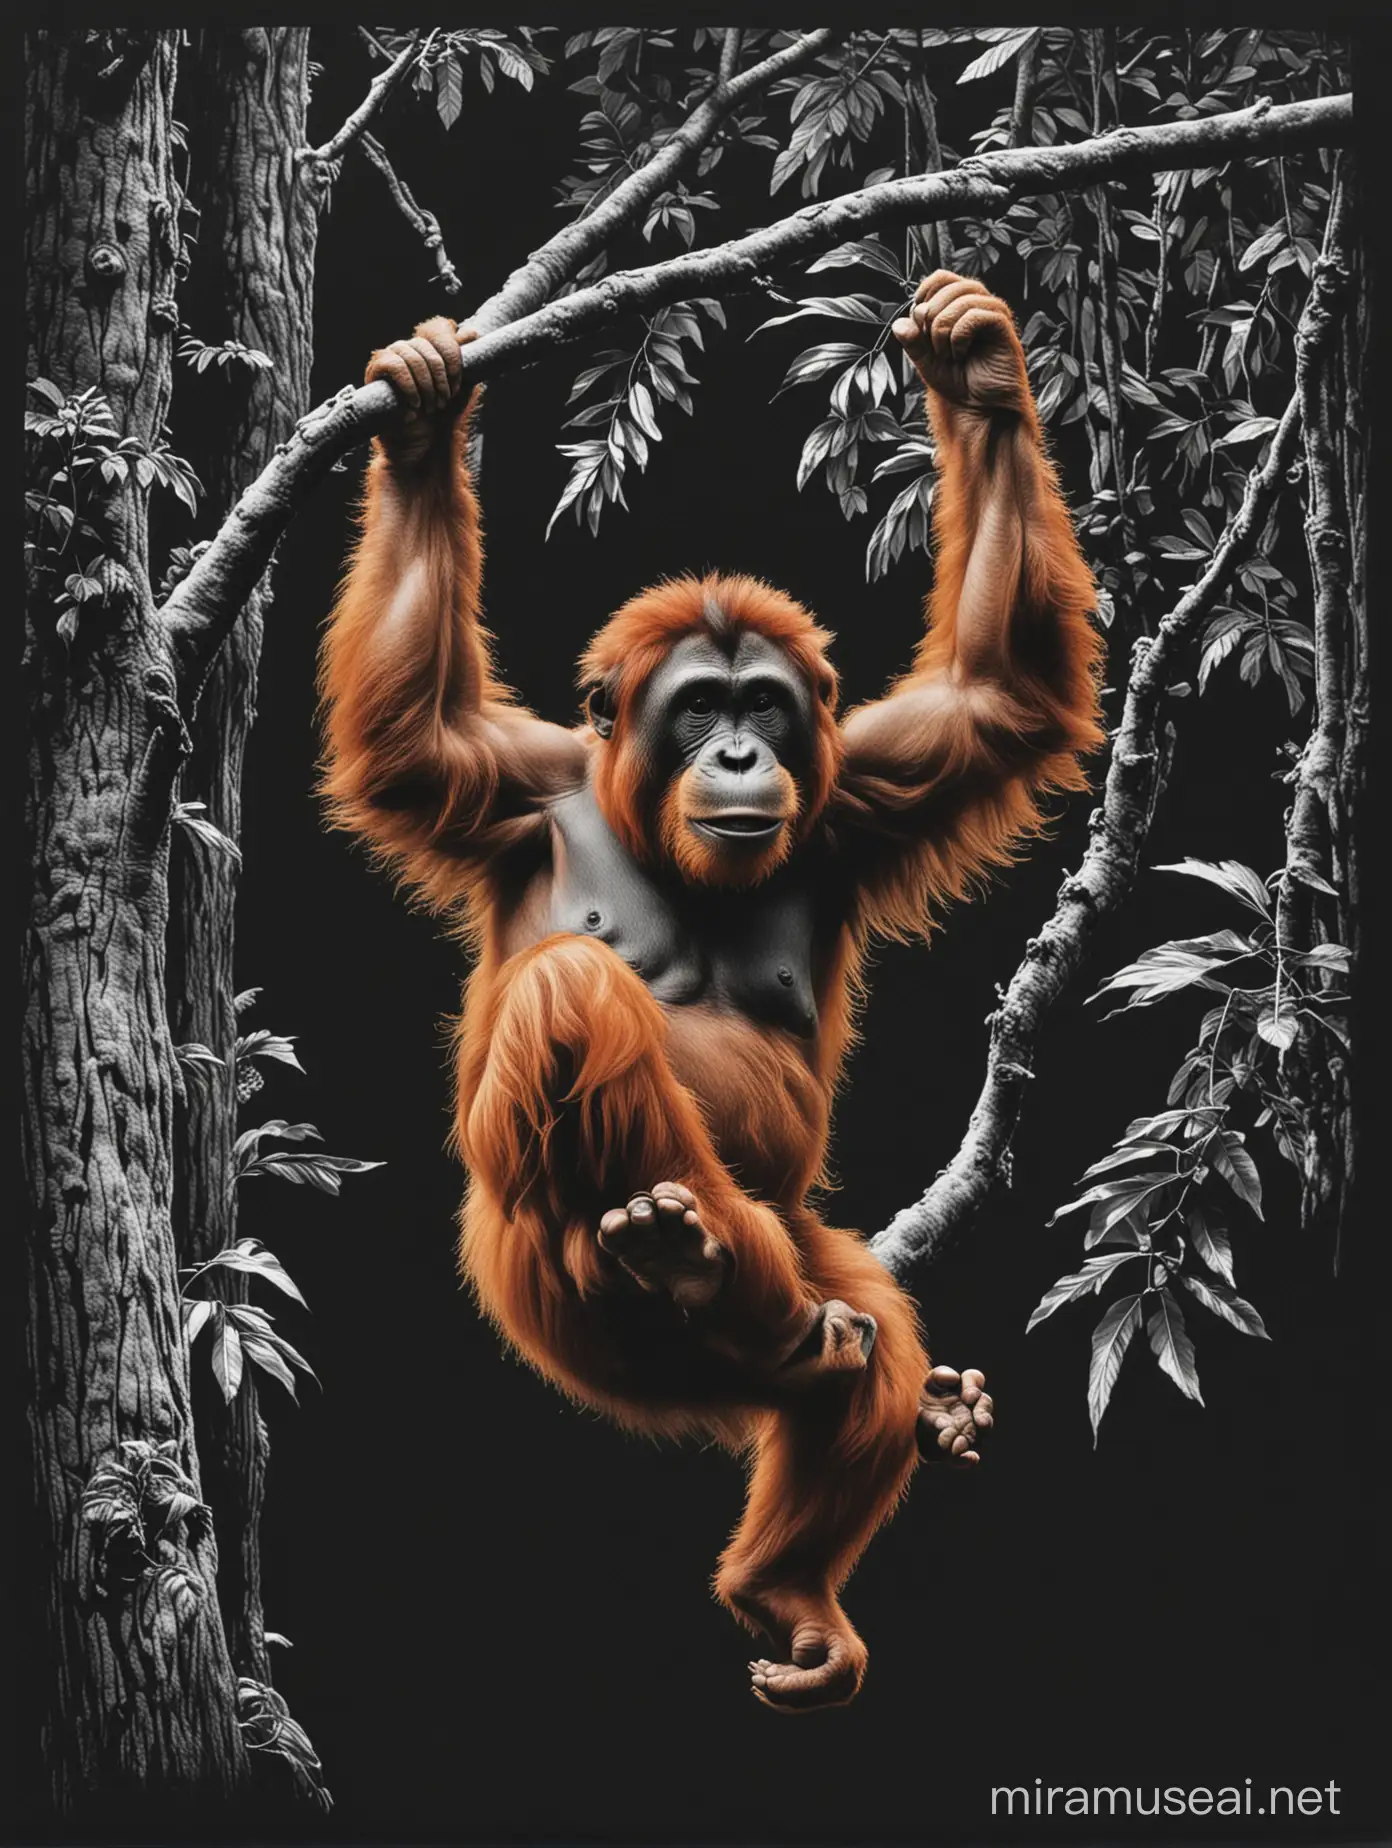 Orangutan Swinging on Tree against Black Background for Screen Printing